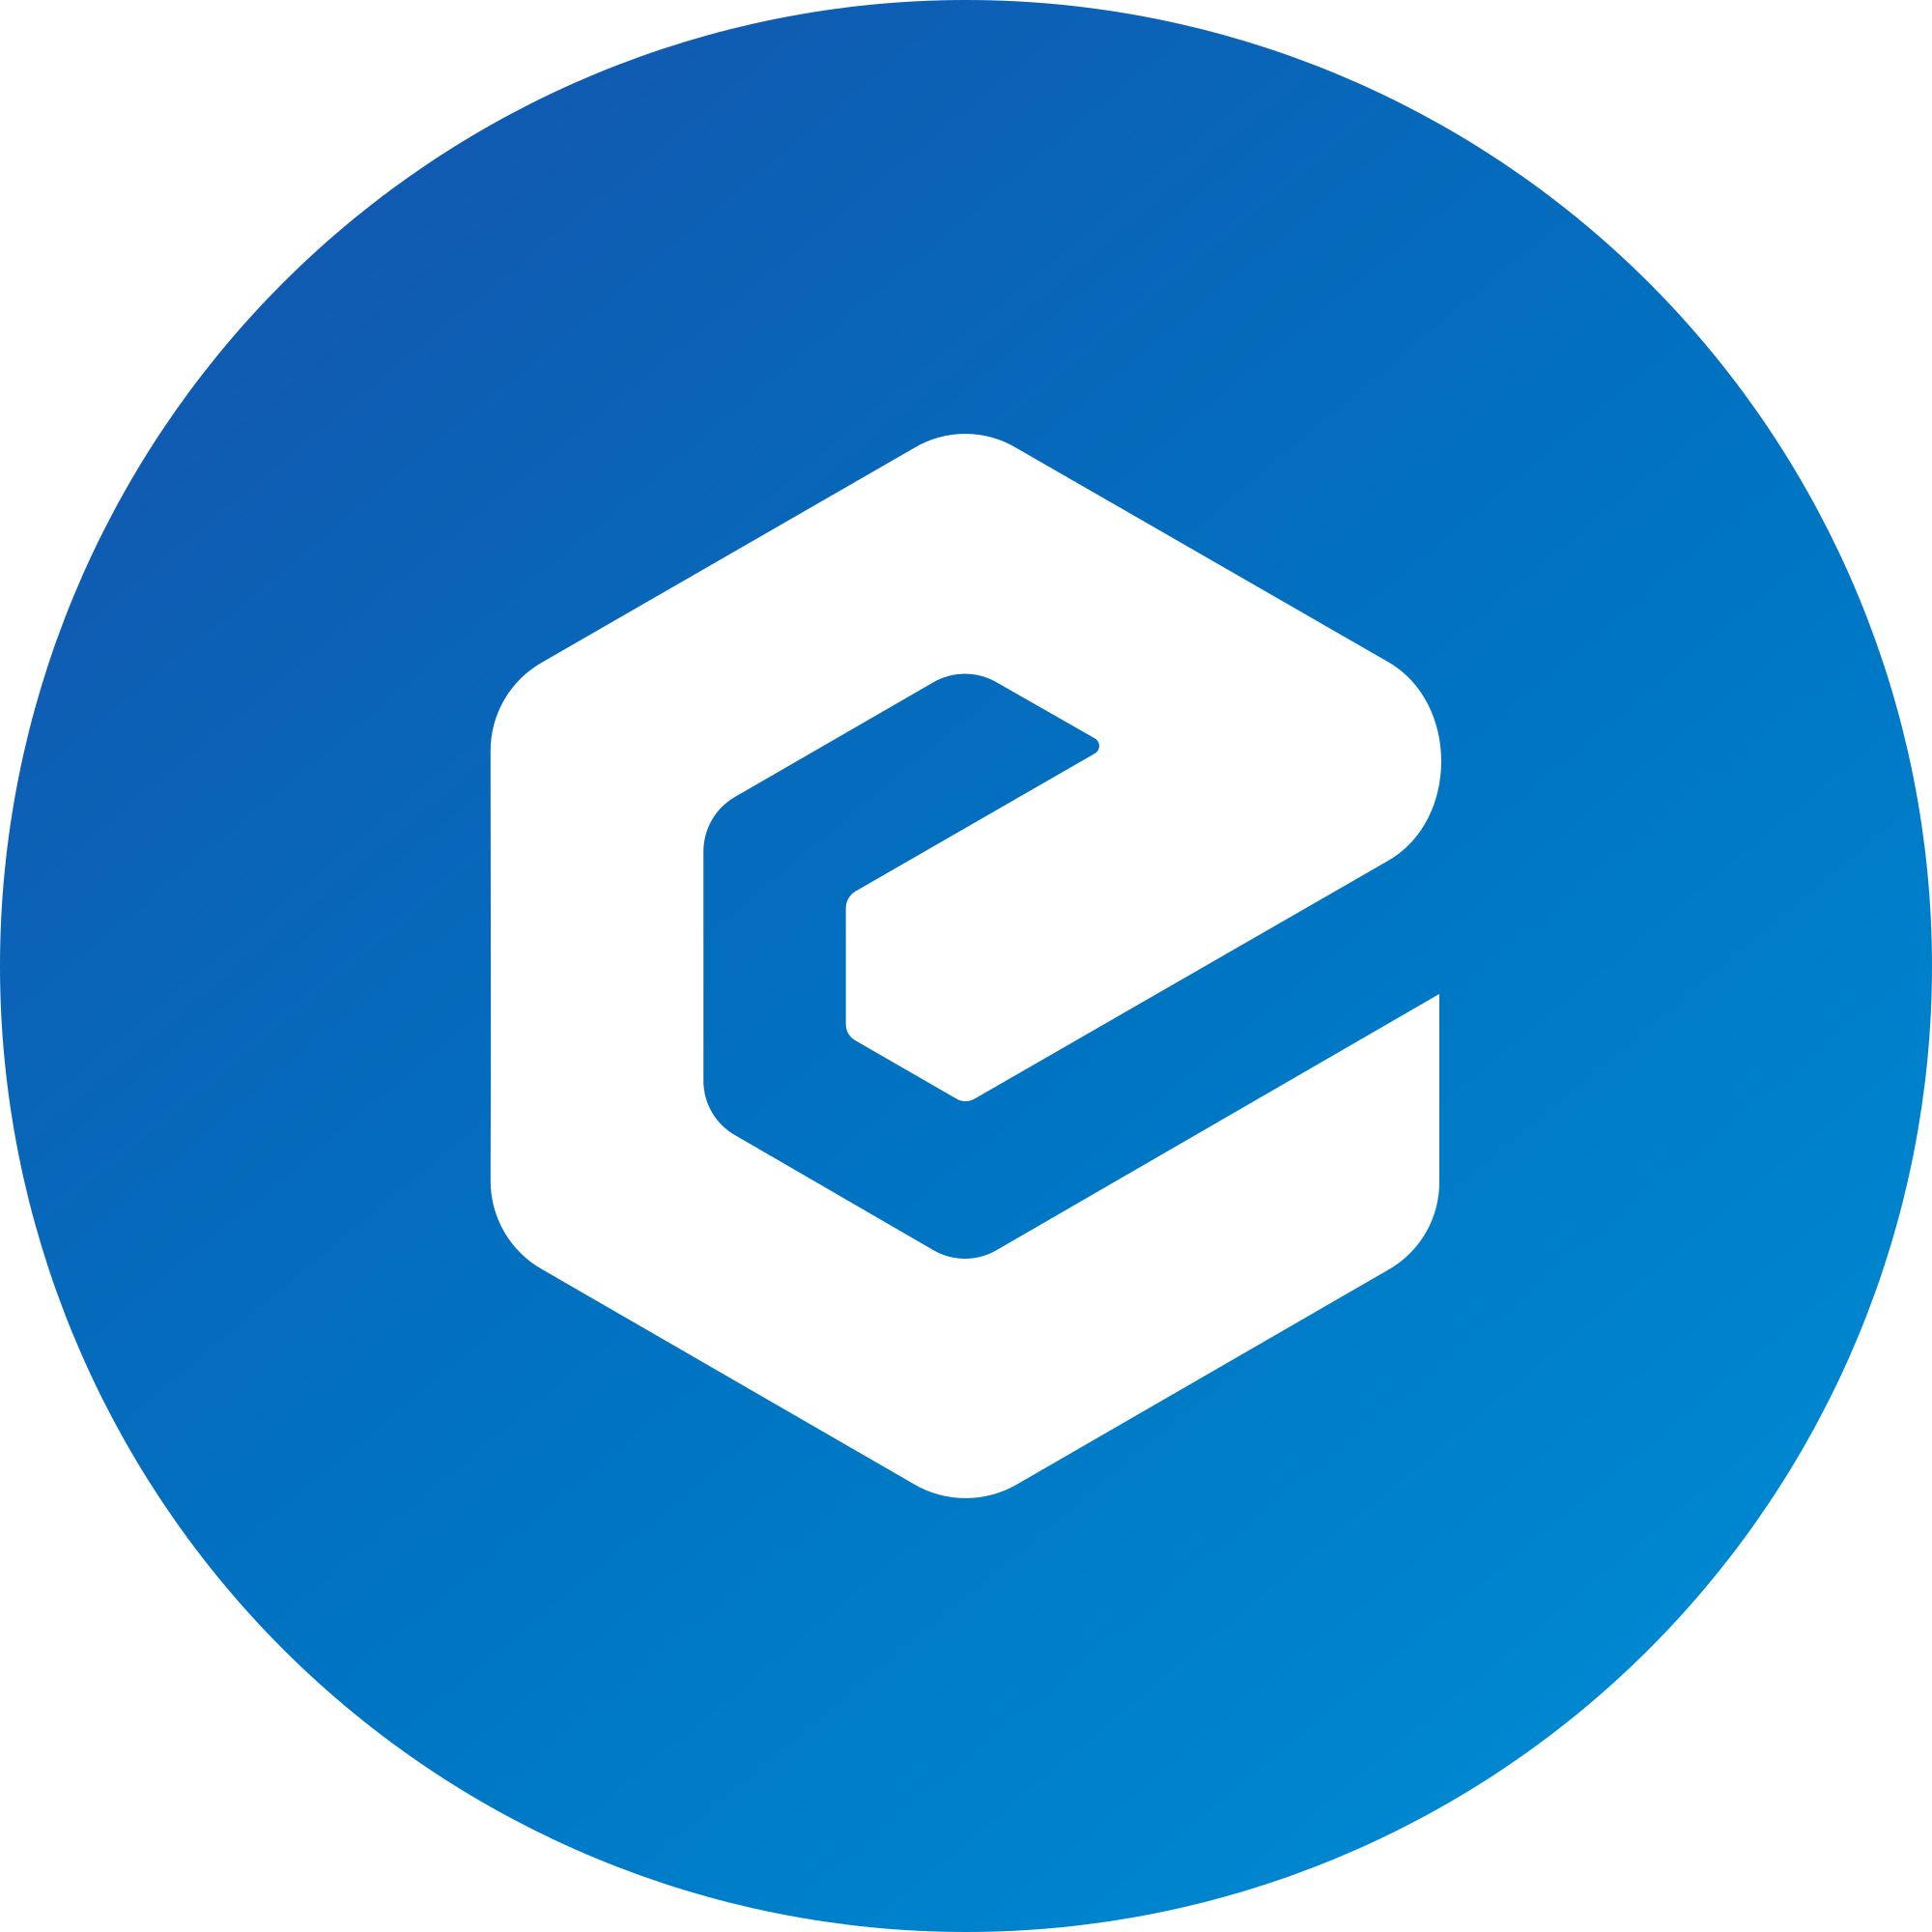 eCash (XEC) Logo .SVG and .PNG Files Download